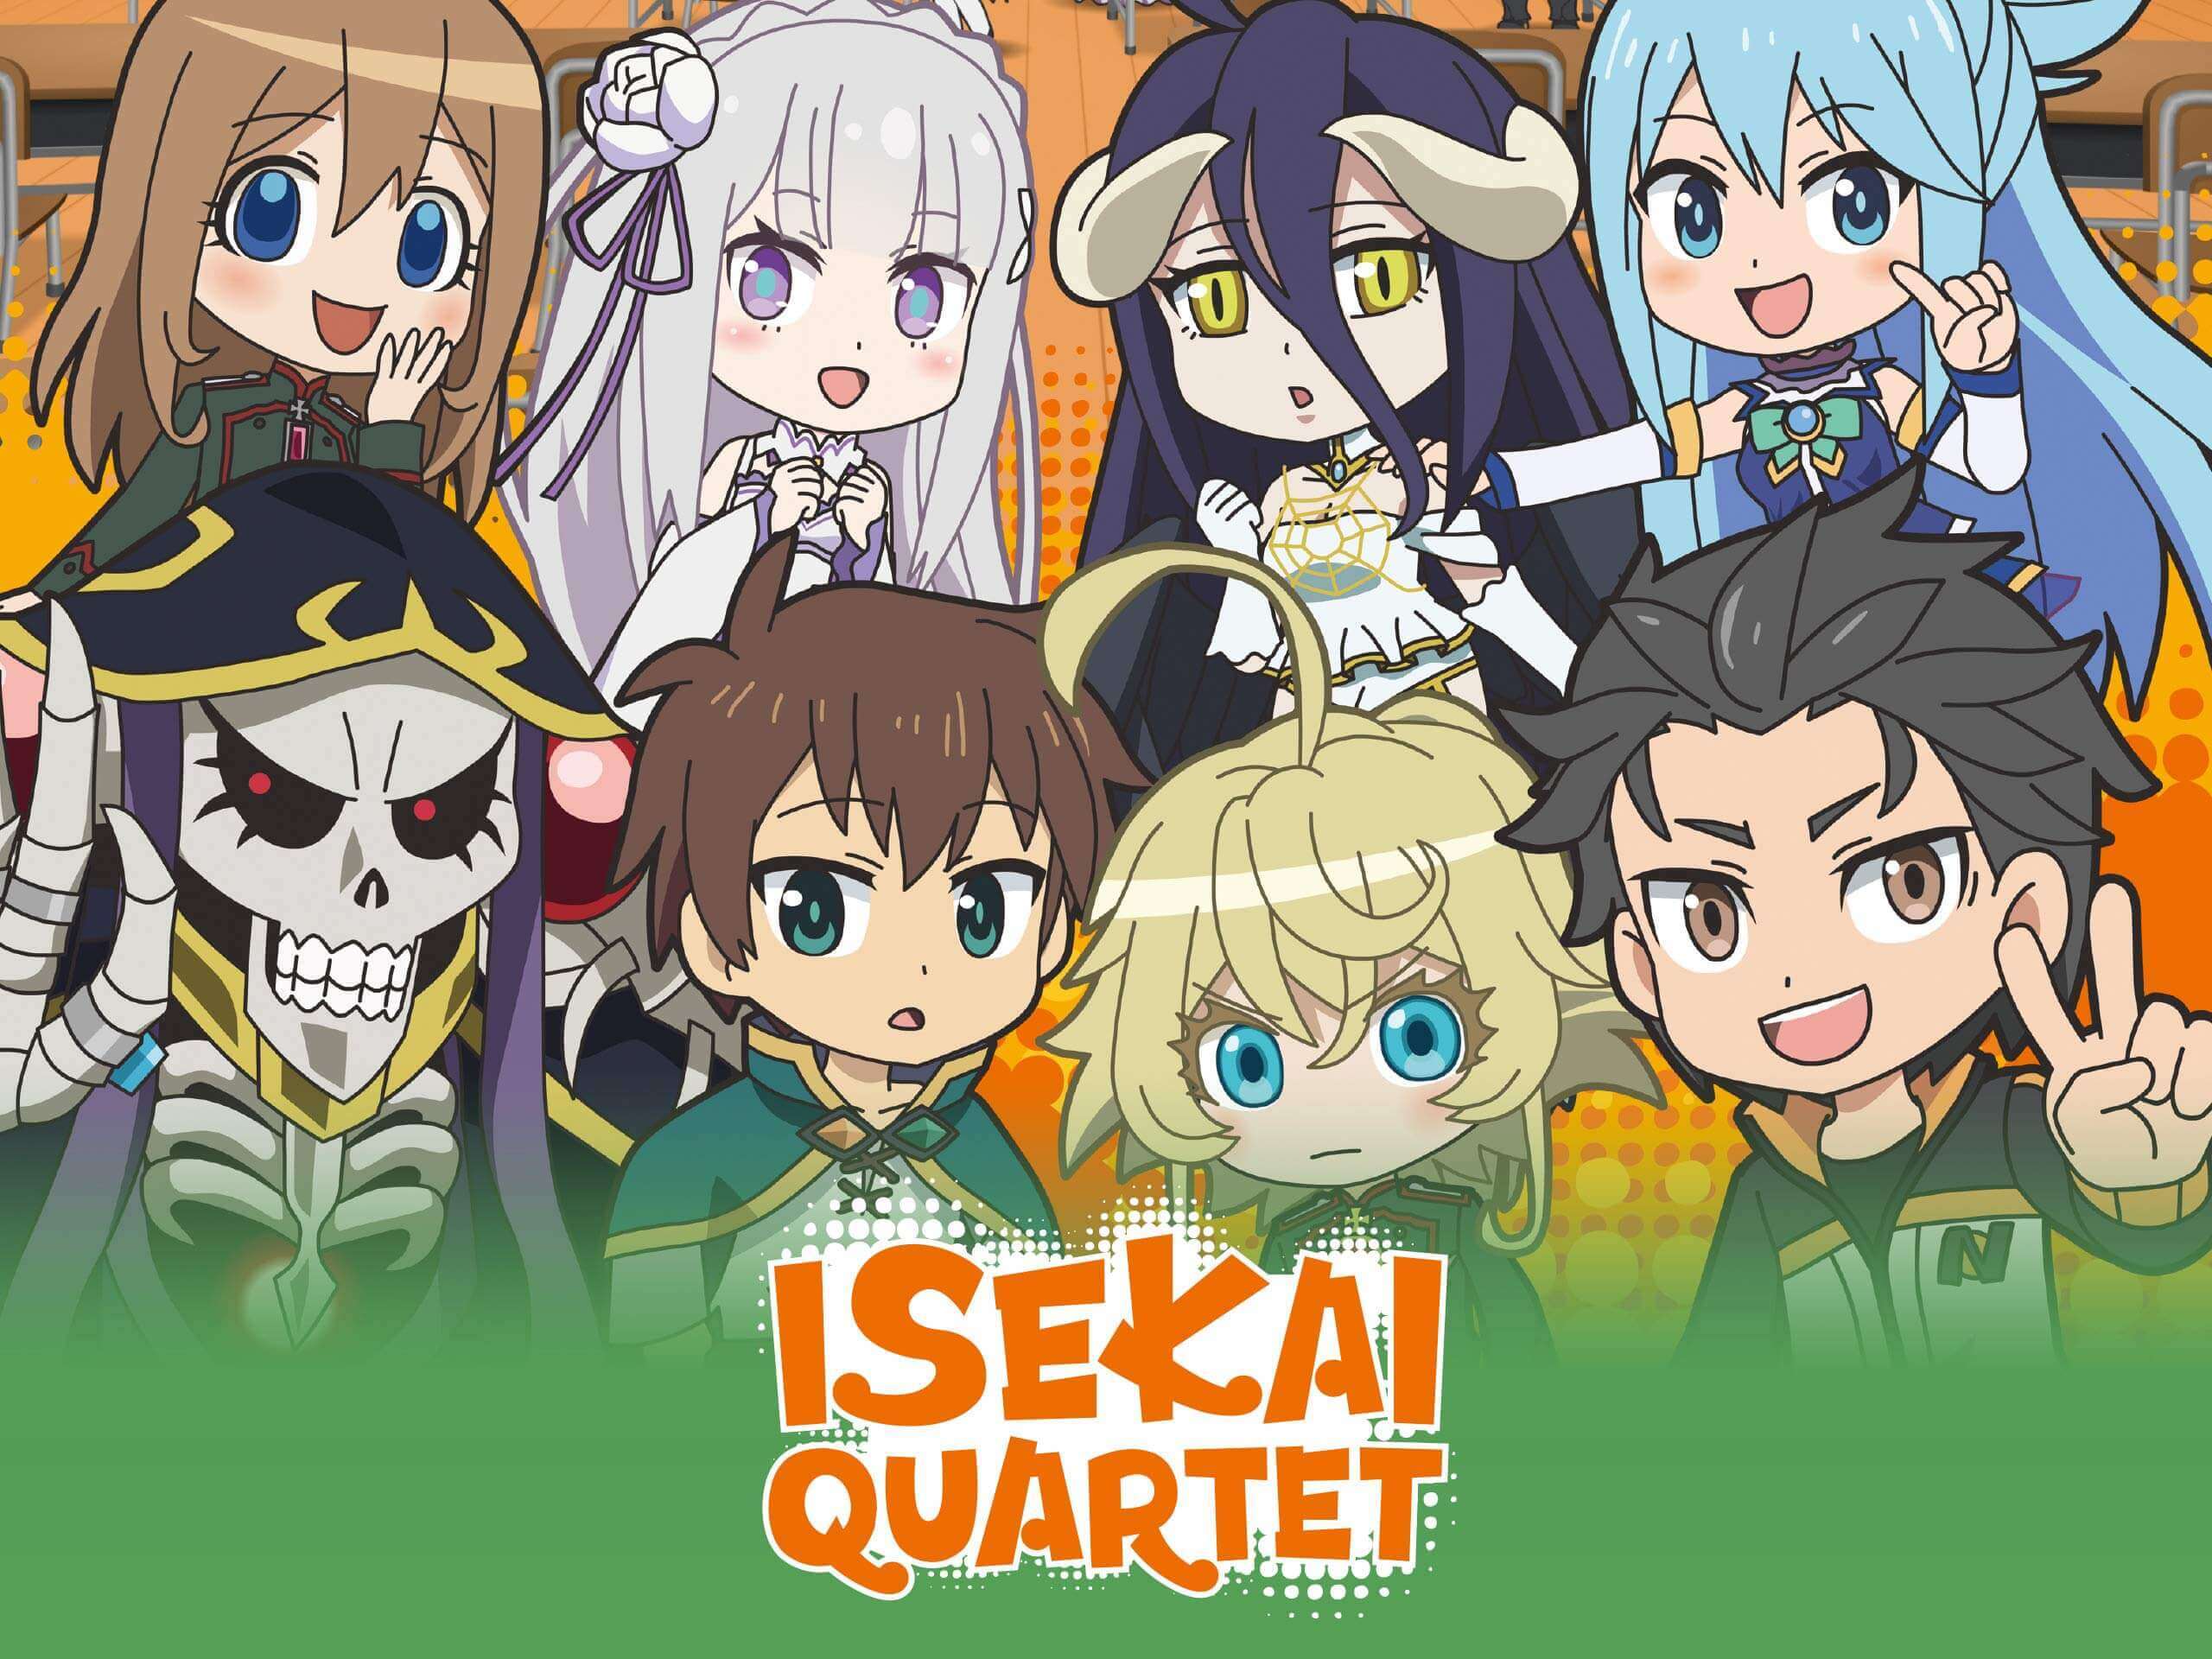 Review dan Sinopsis anime "Isekai Quartet" - KelasAnimasi.Com